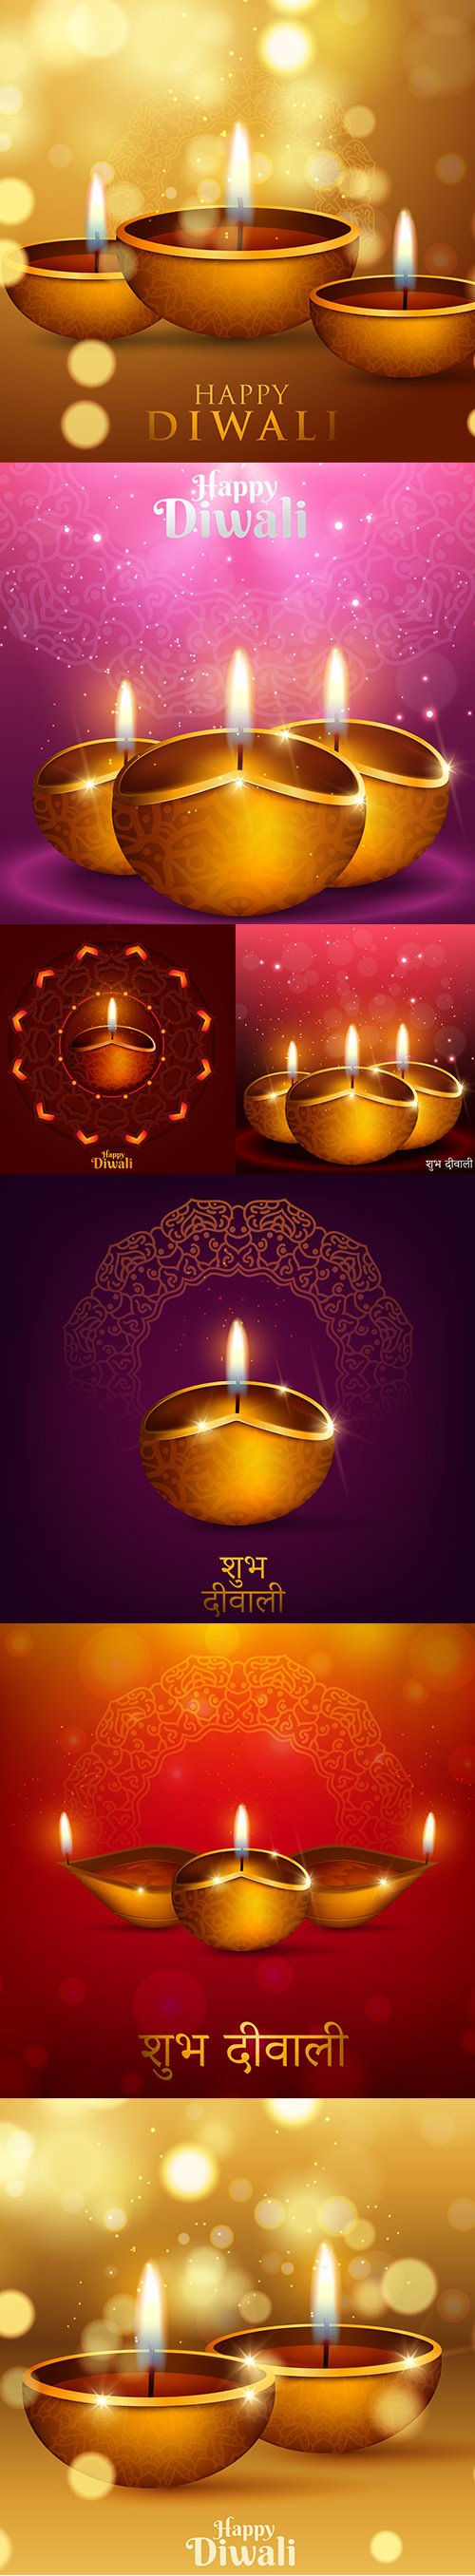 Happy Diwali Festival Template